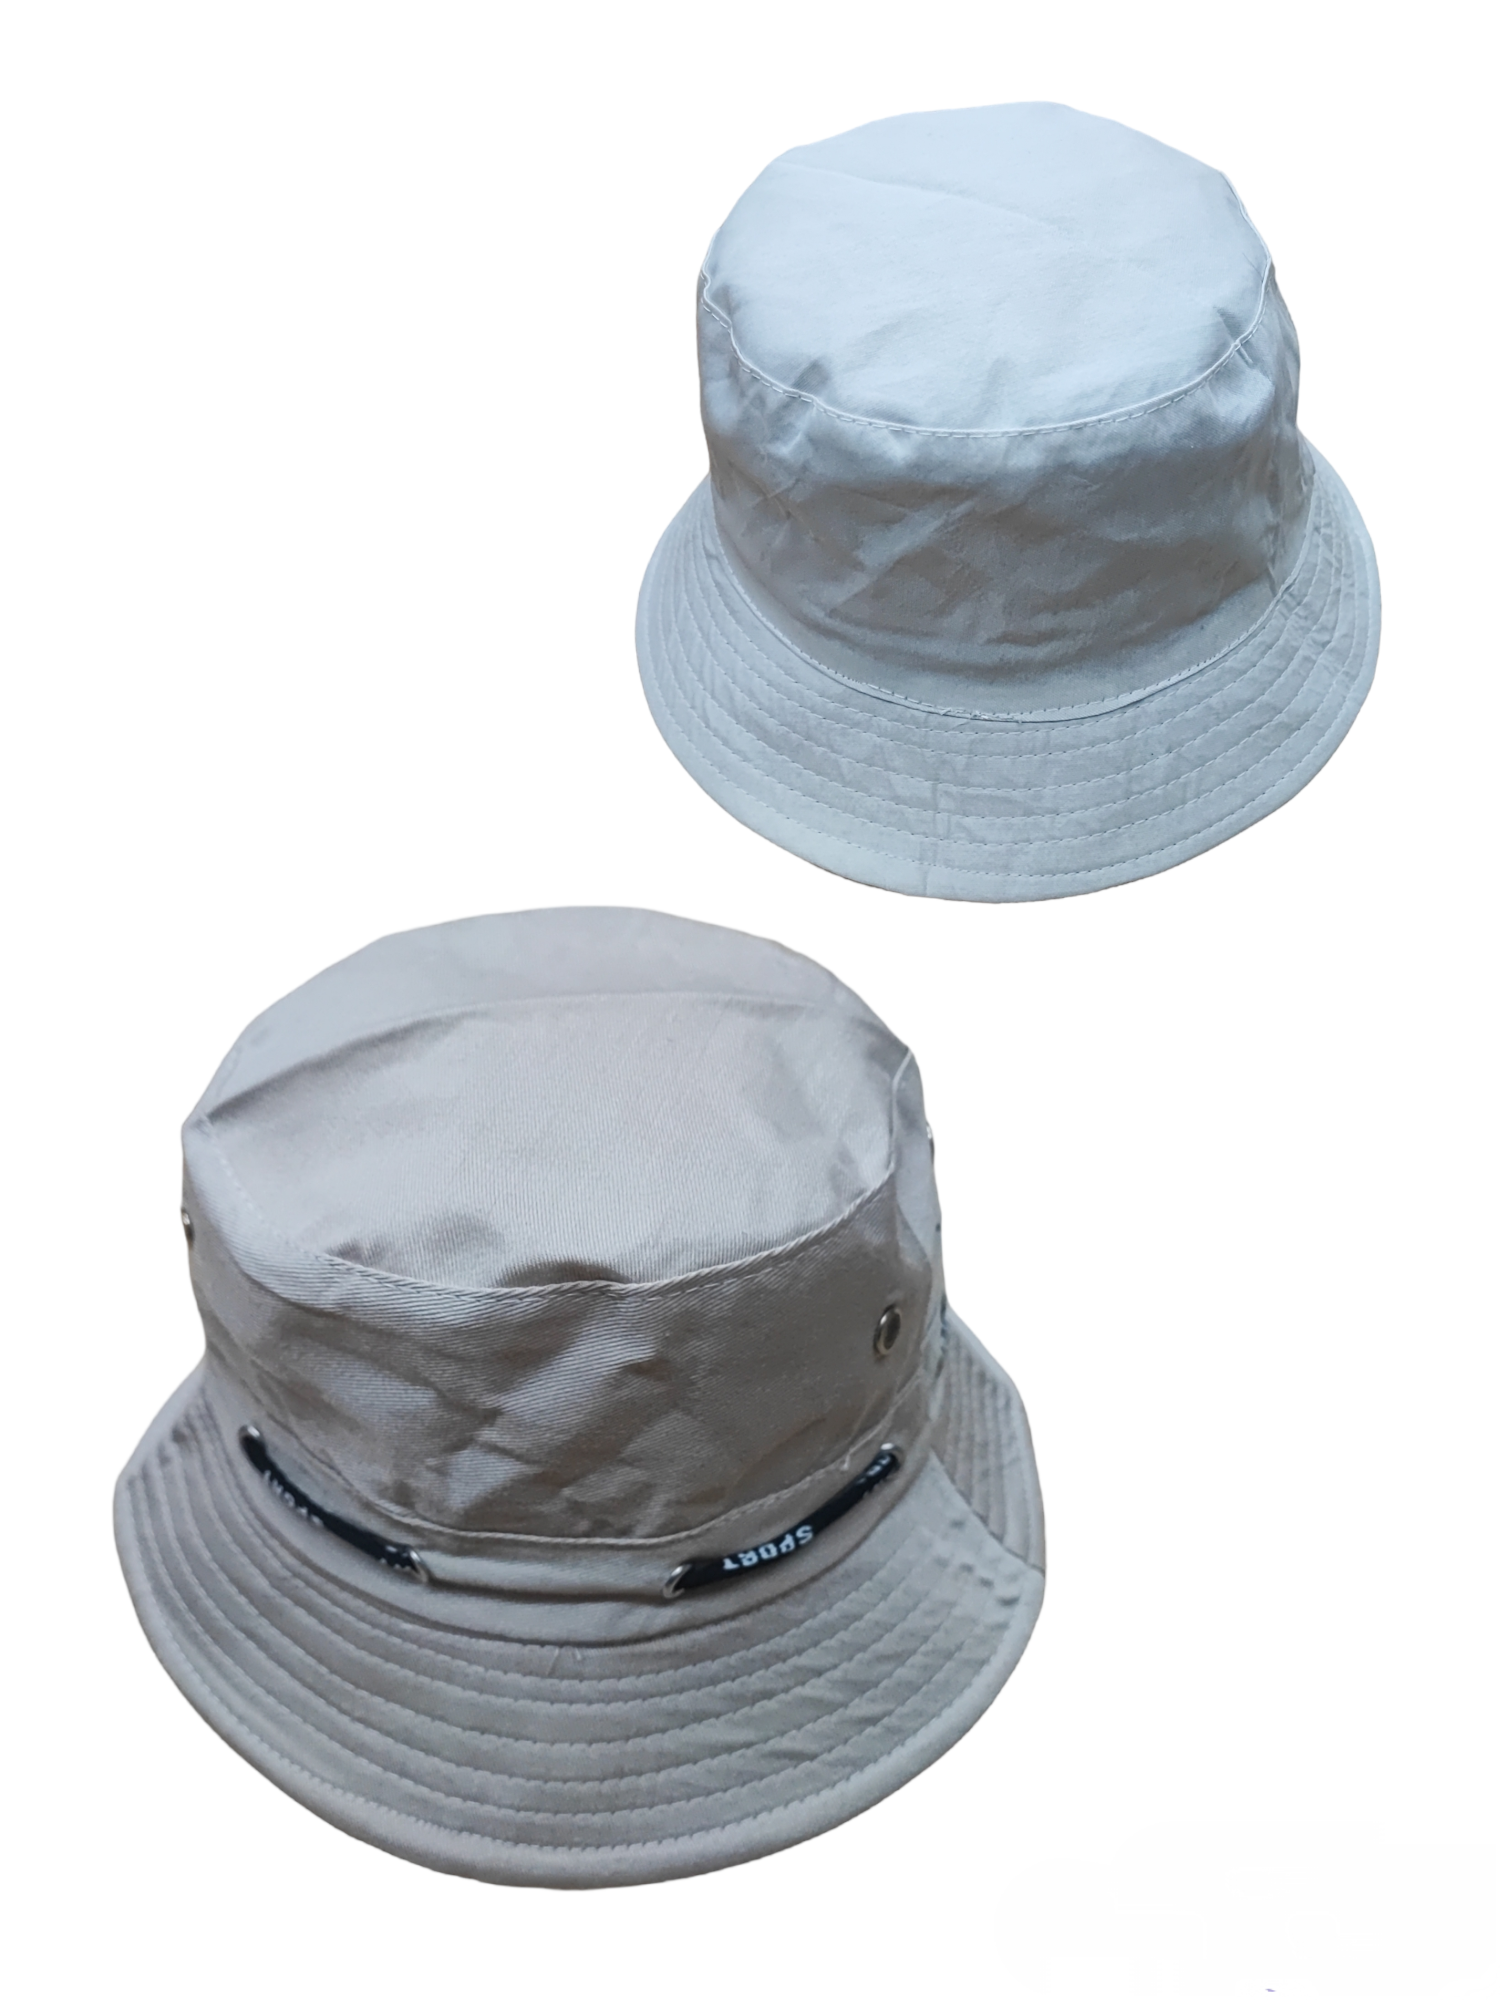 Chapeaux bob réversible   (x12)